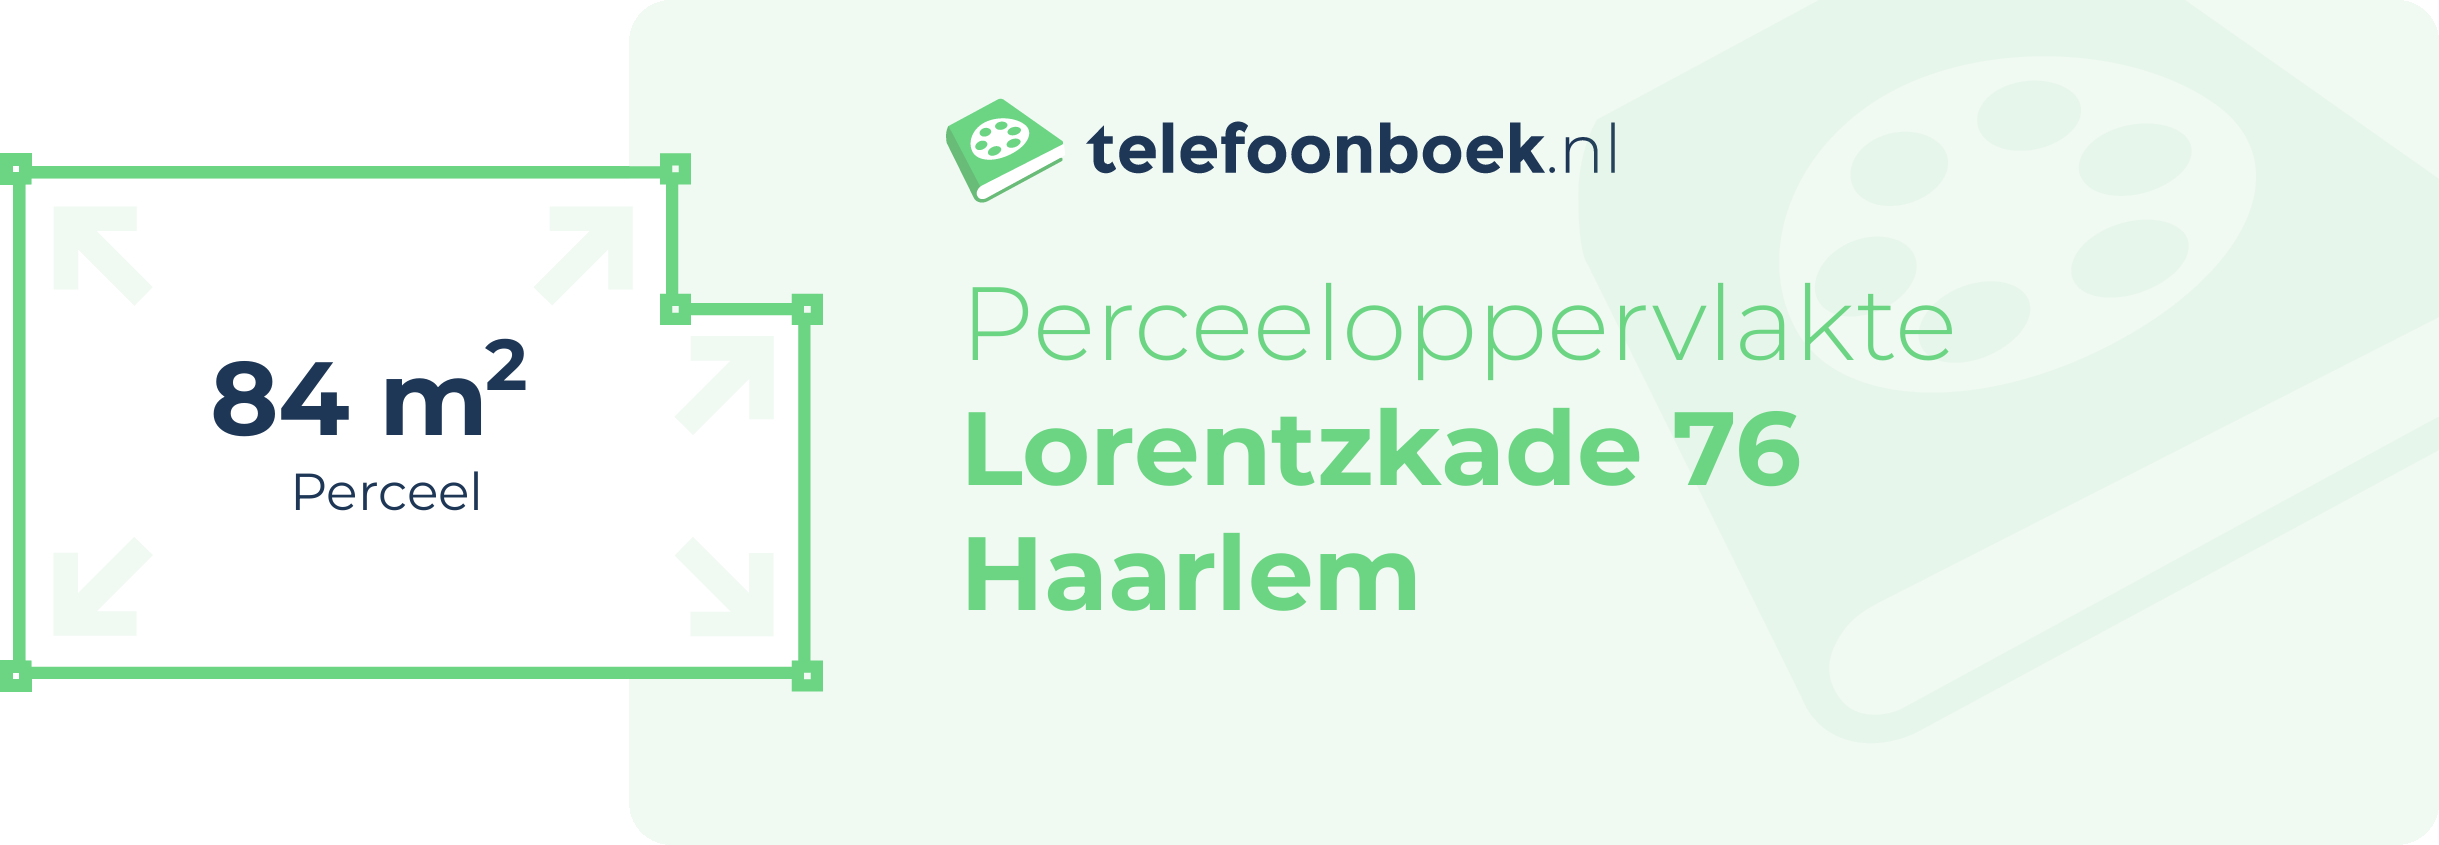 Perceeloppervlakte Lorentzkade 76 Haarlem